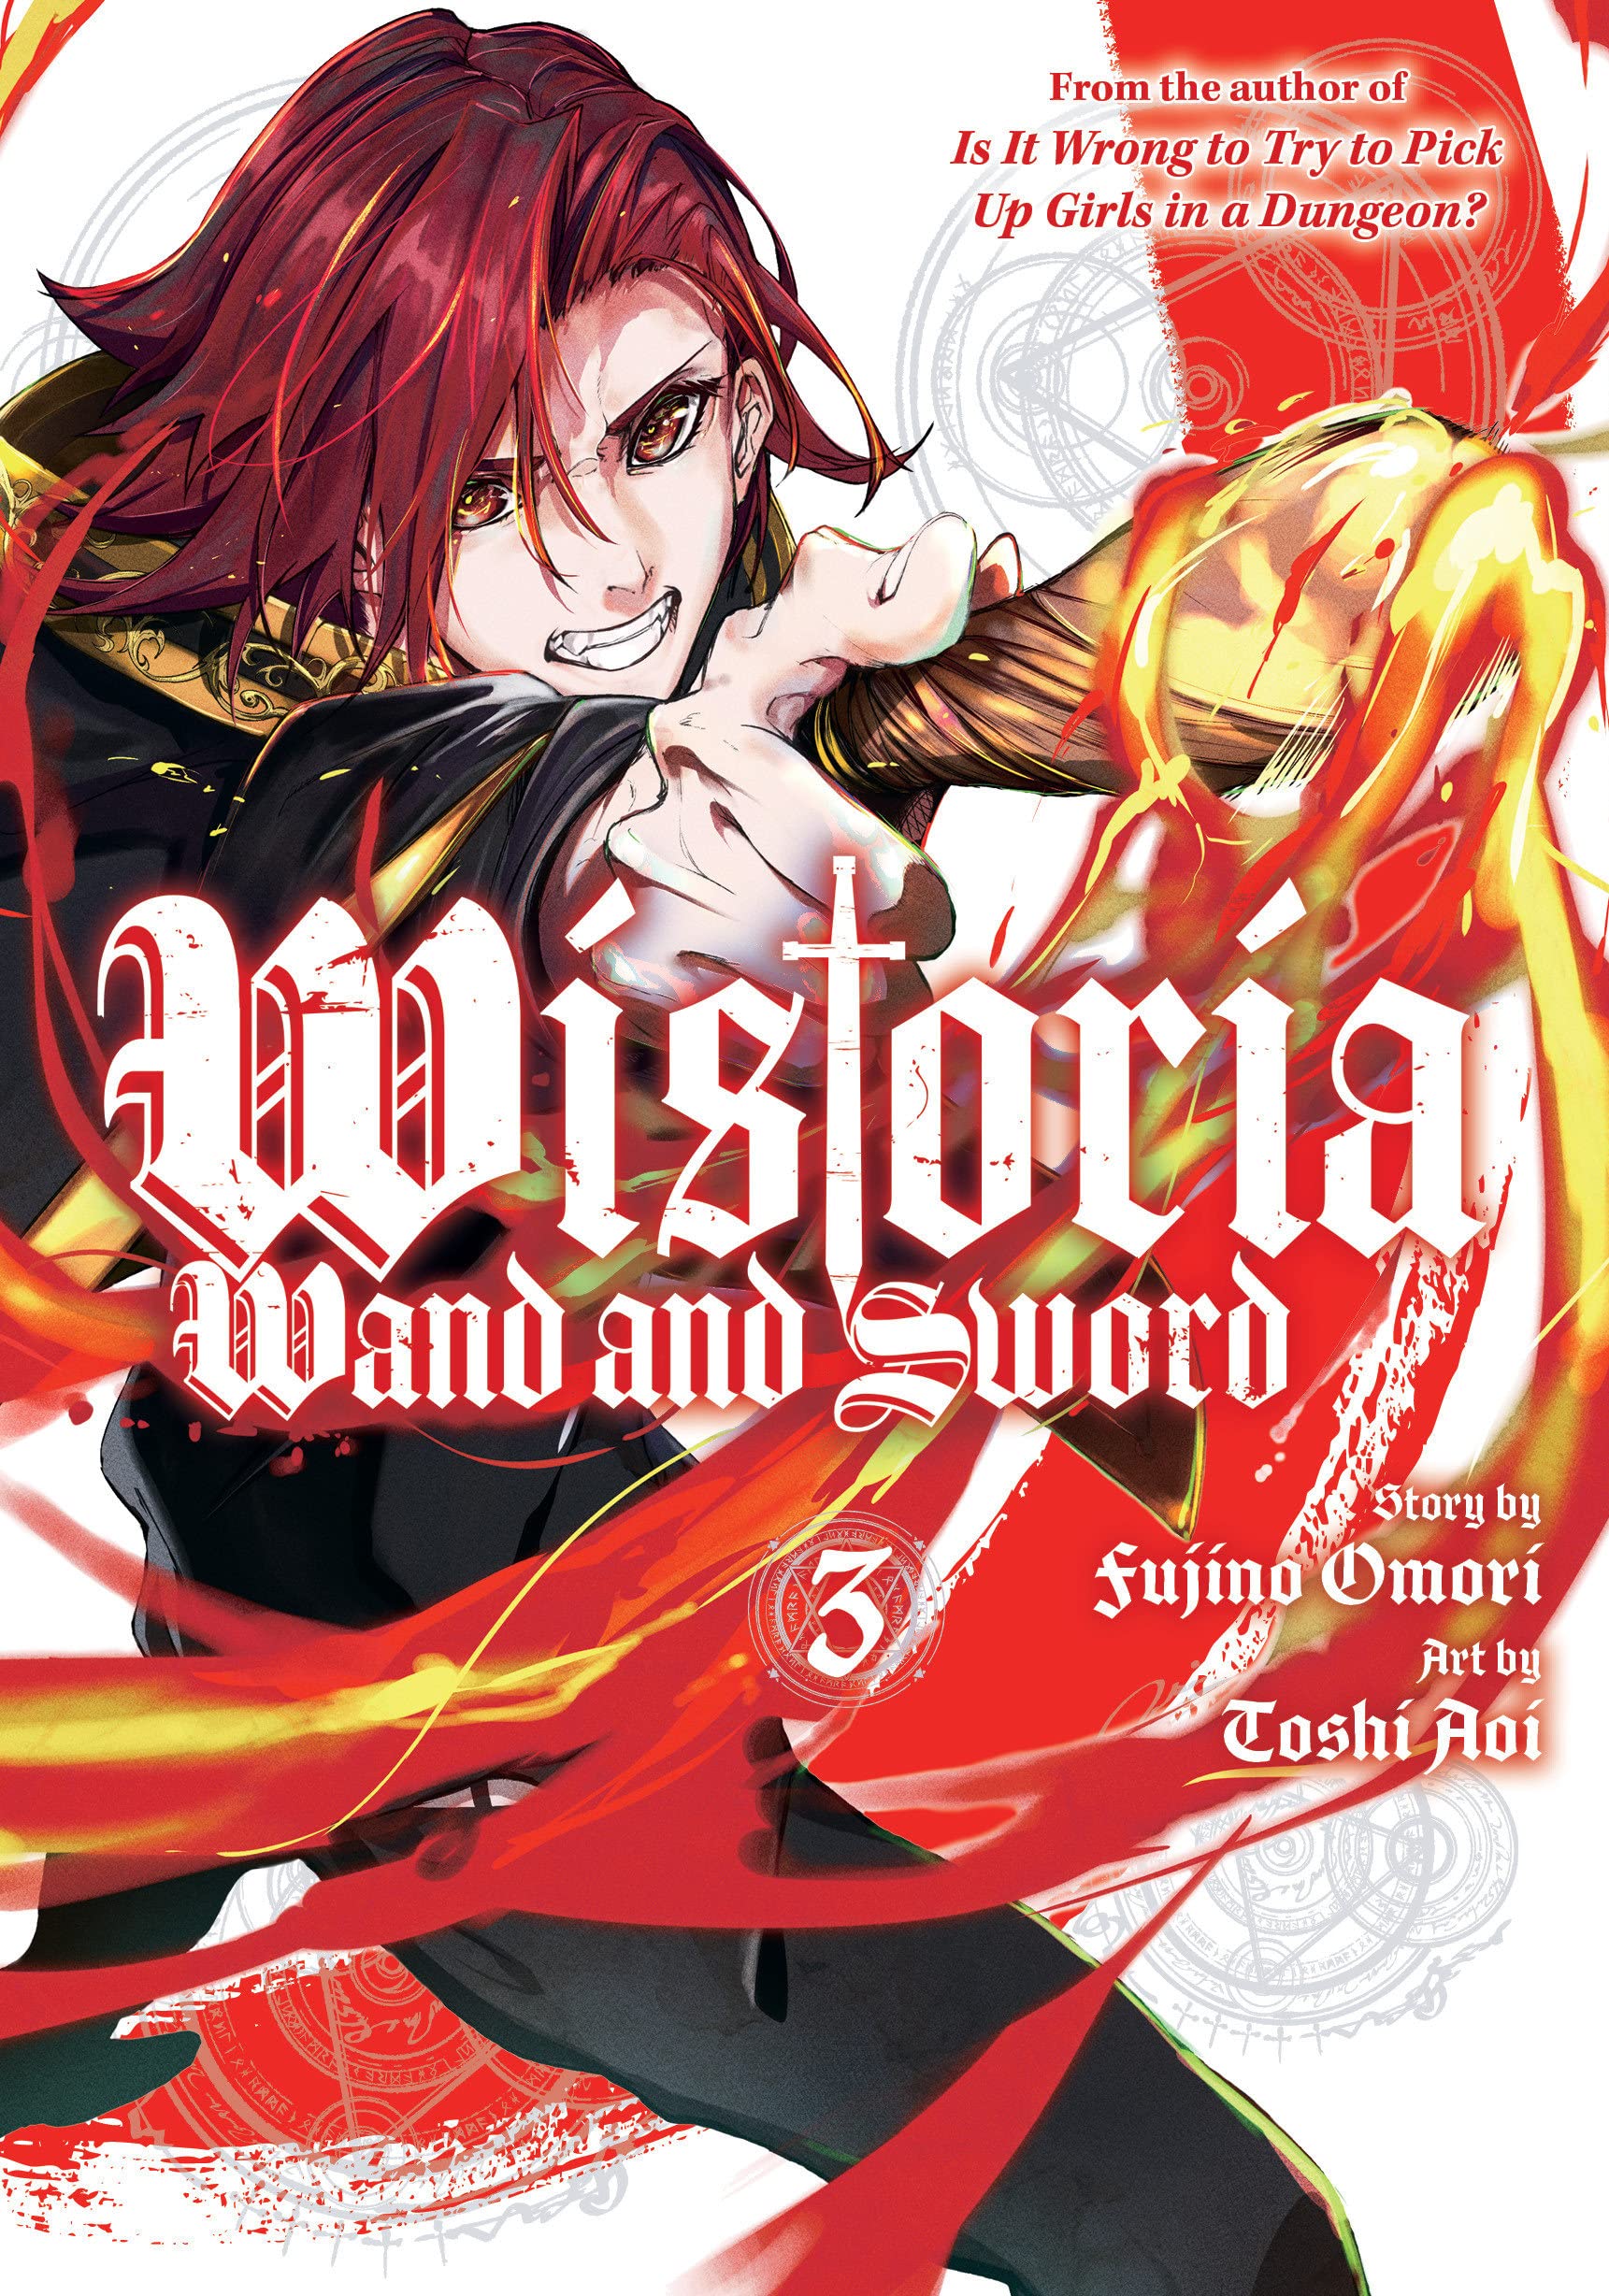 Wistoria: Wand and Sword Vol. 03